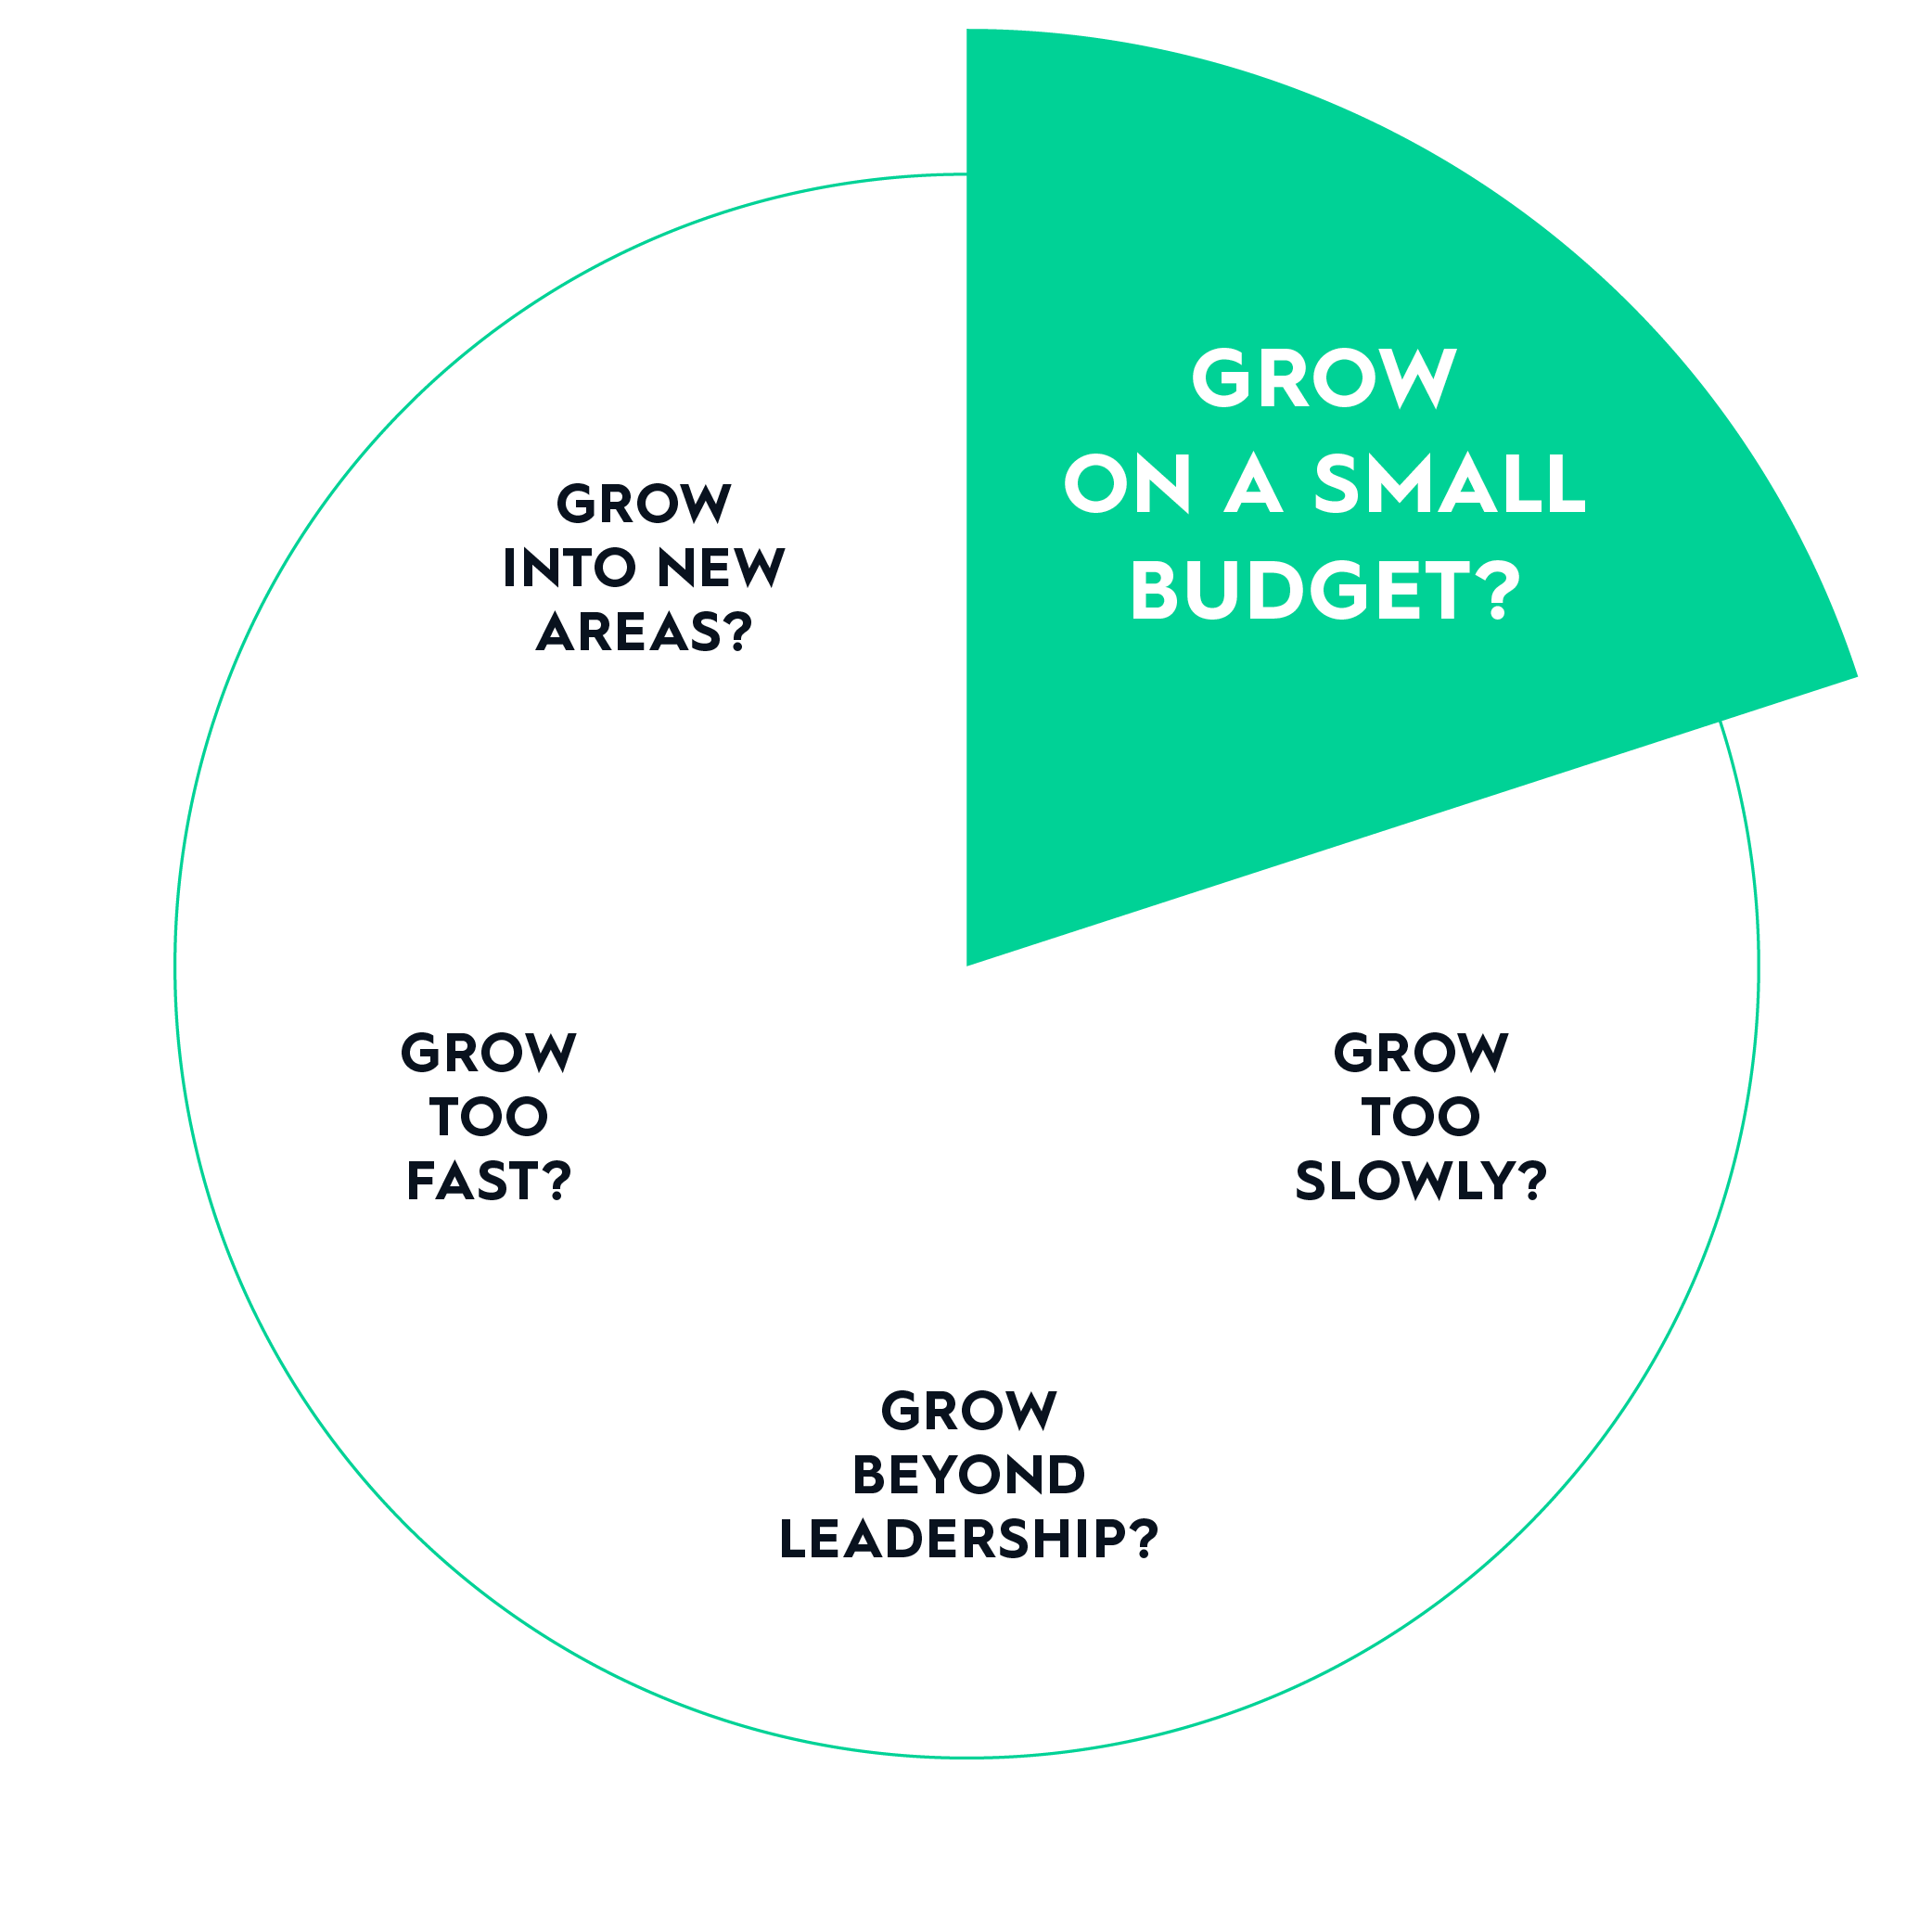 Do you need to grow on a small budget?